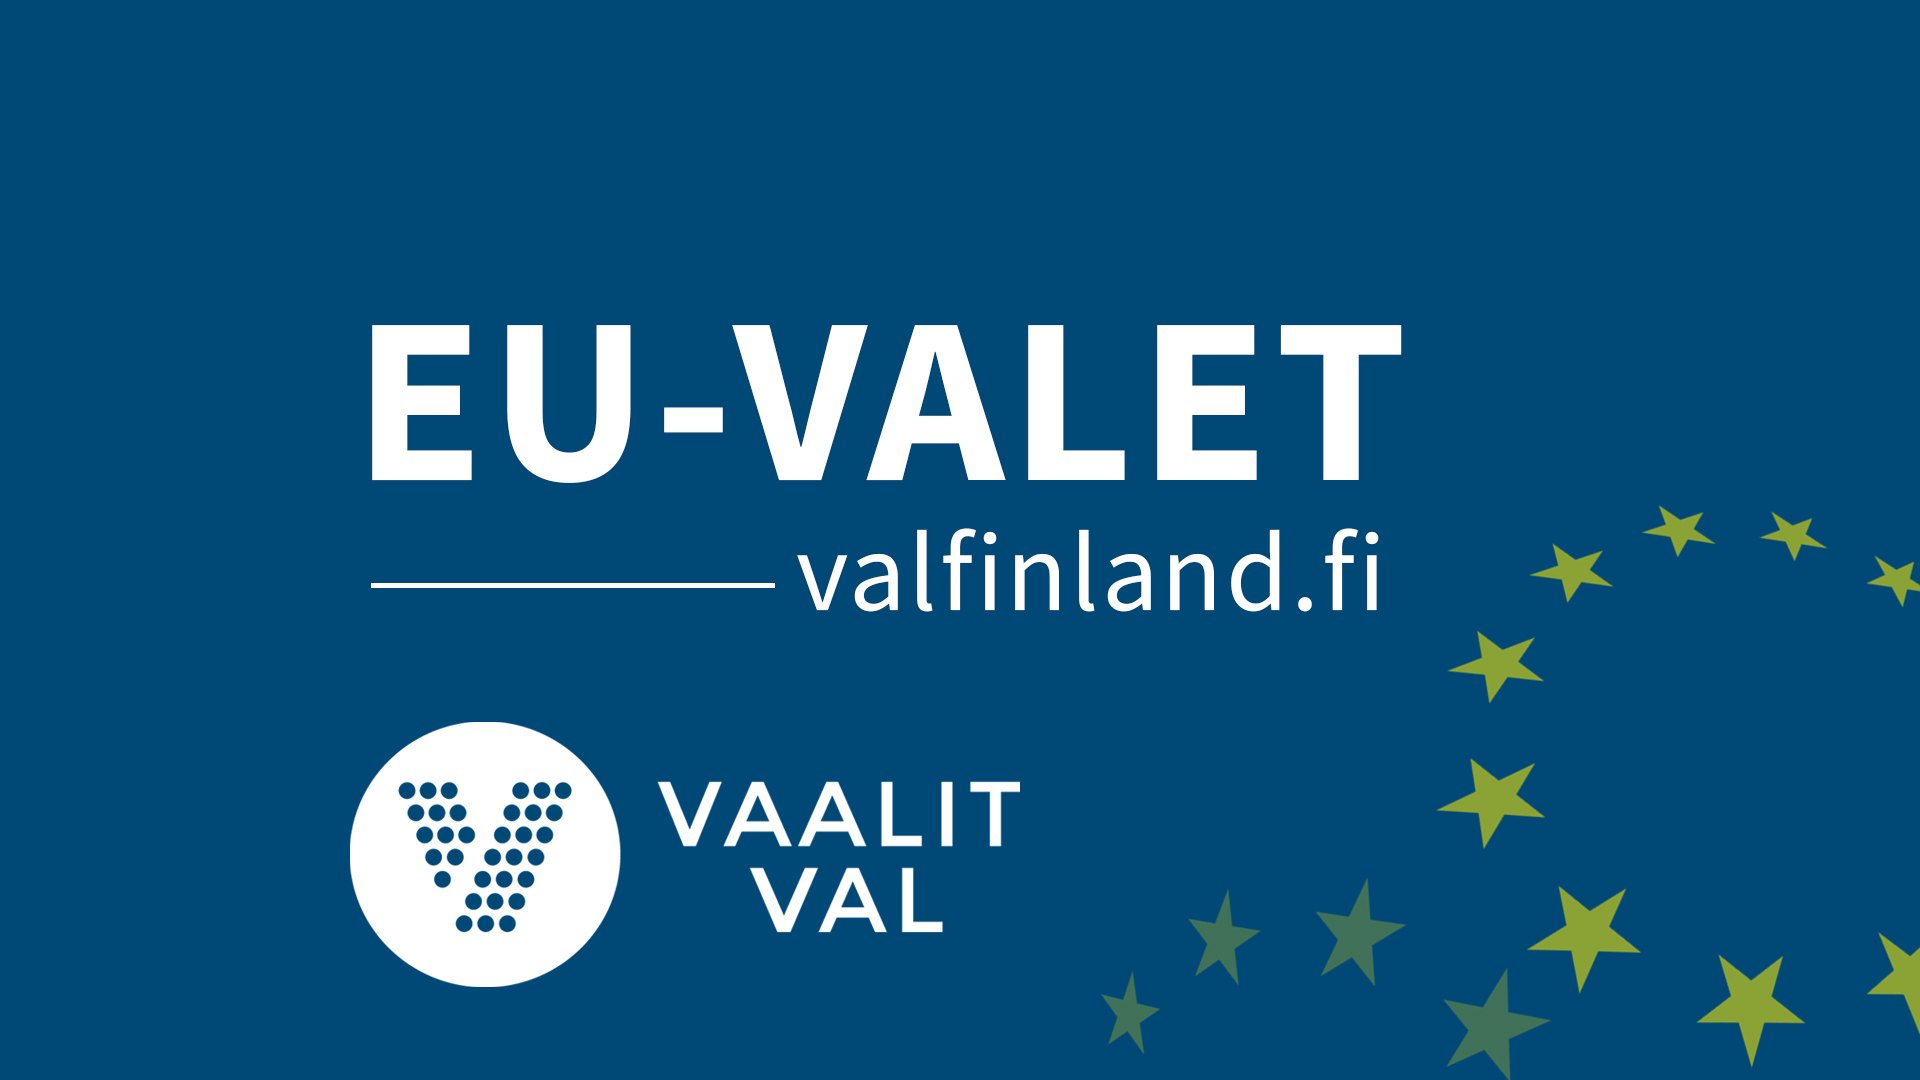 EU-valet, valfinland.fi